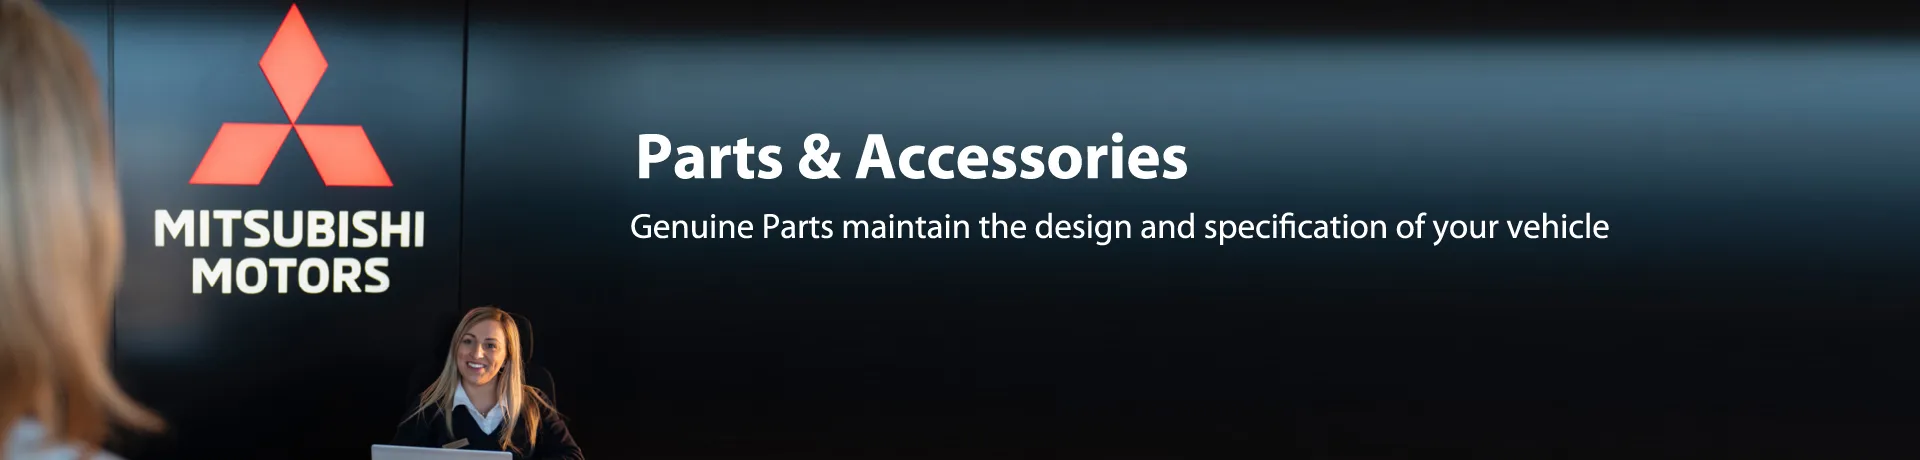 Genuine-Parts-Accessories